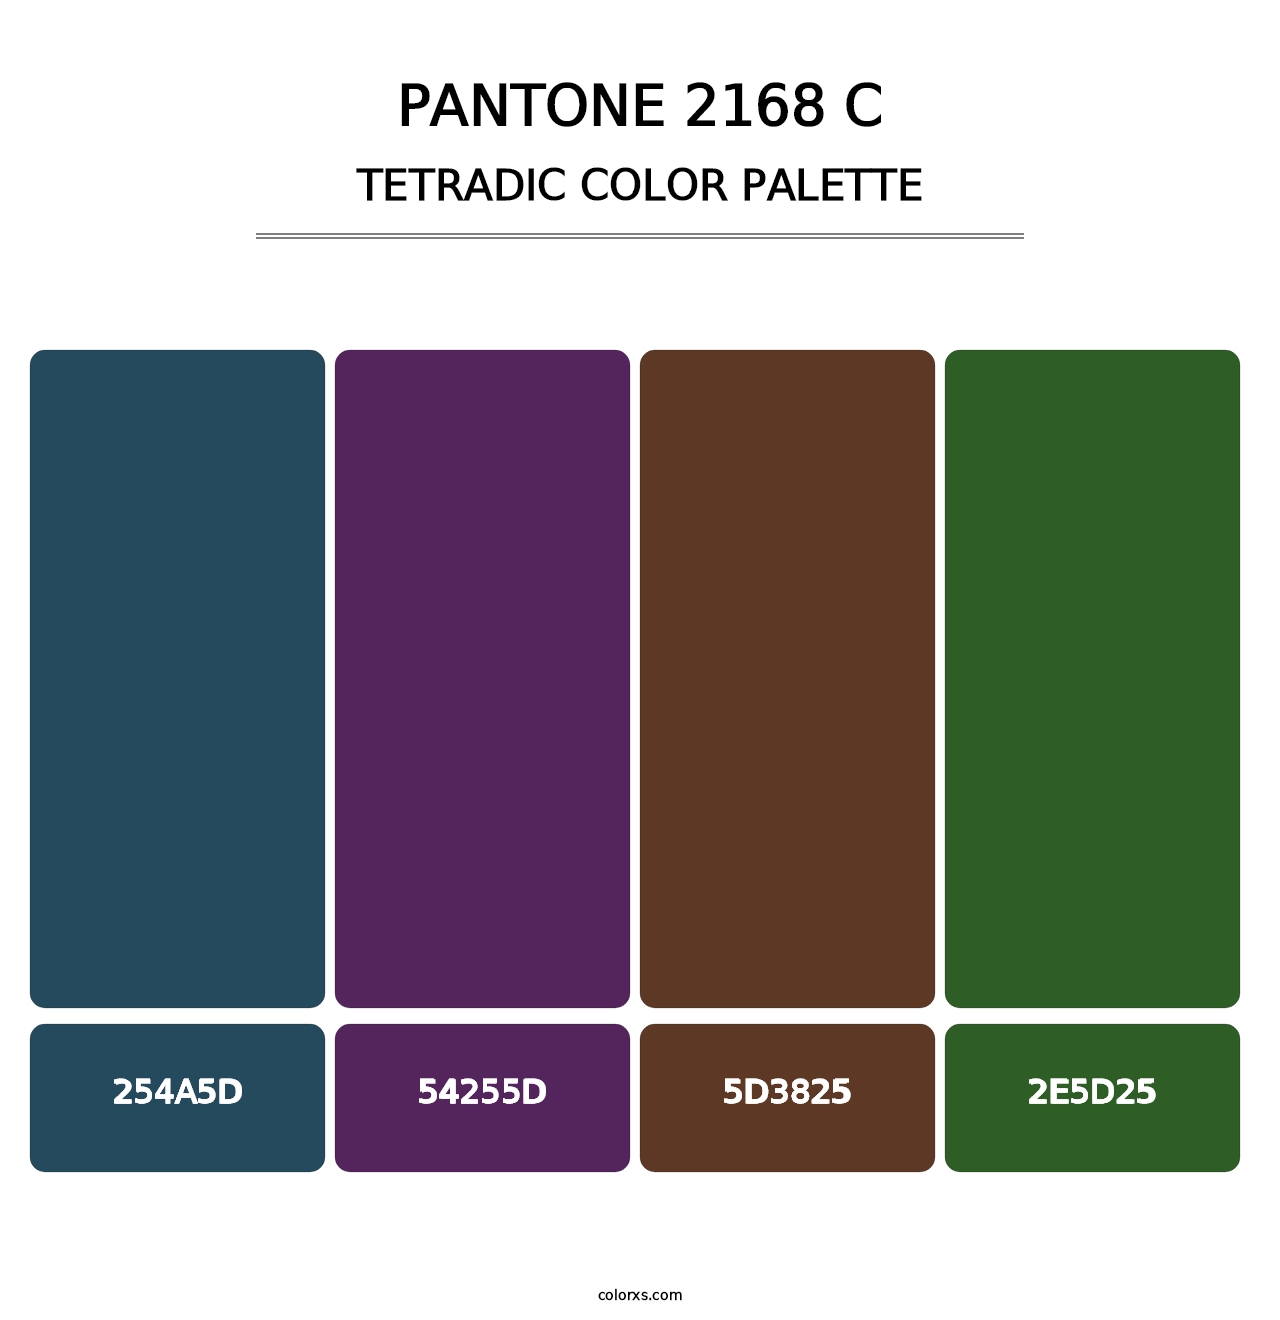 PANTONE 2168 C - Tetradic Color Palette